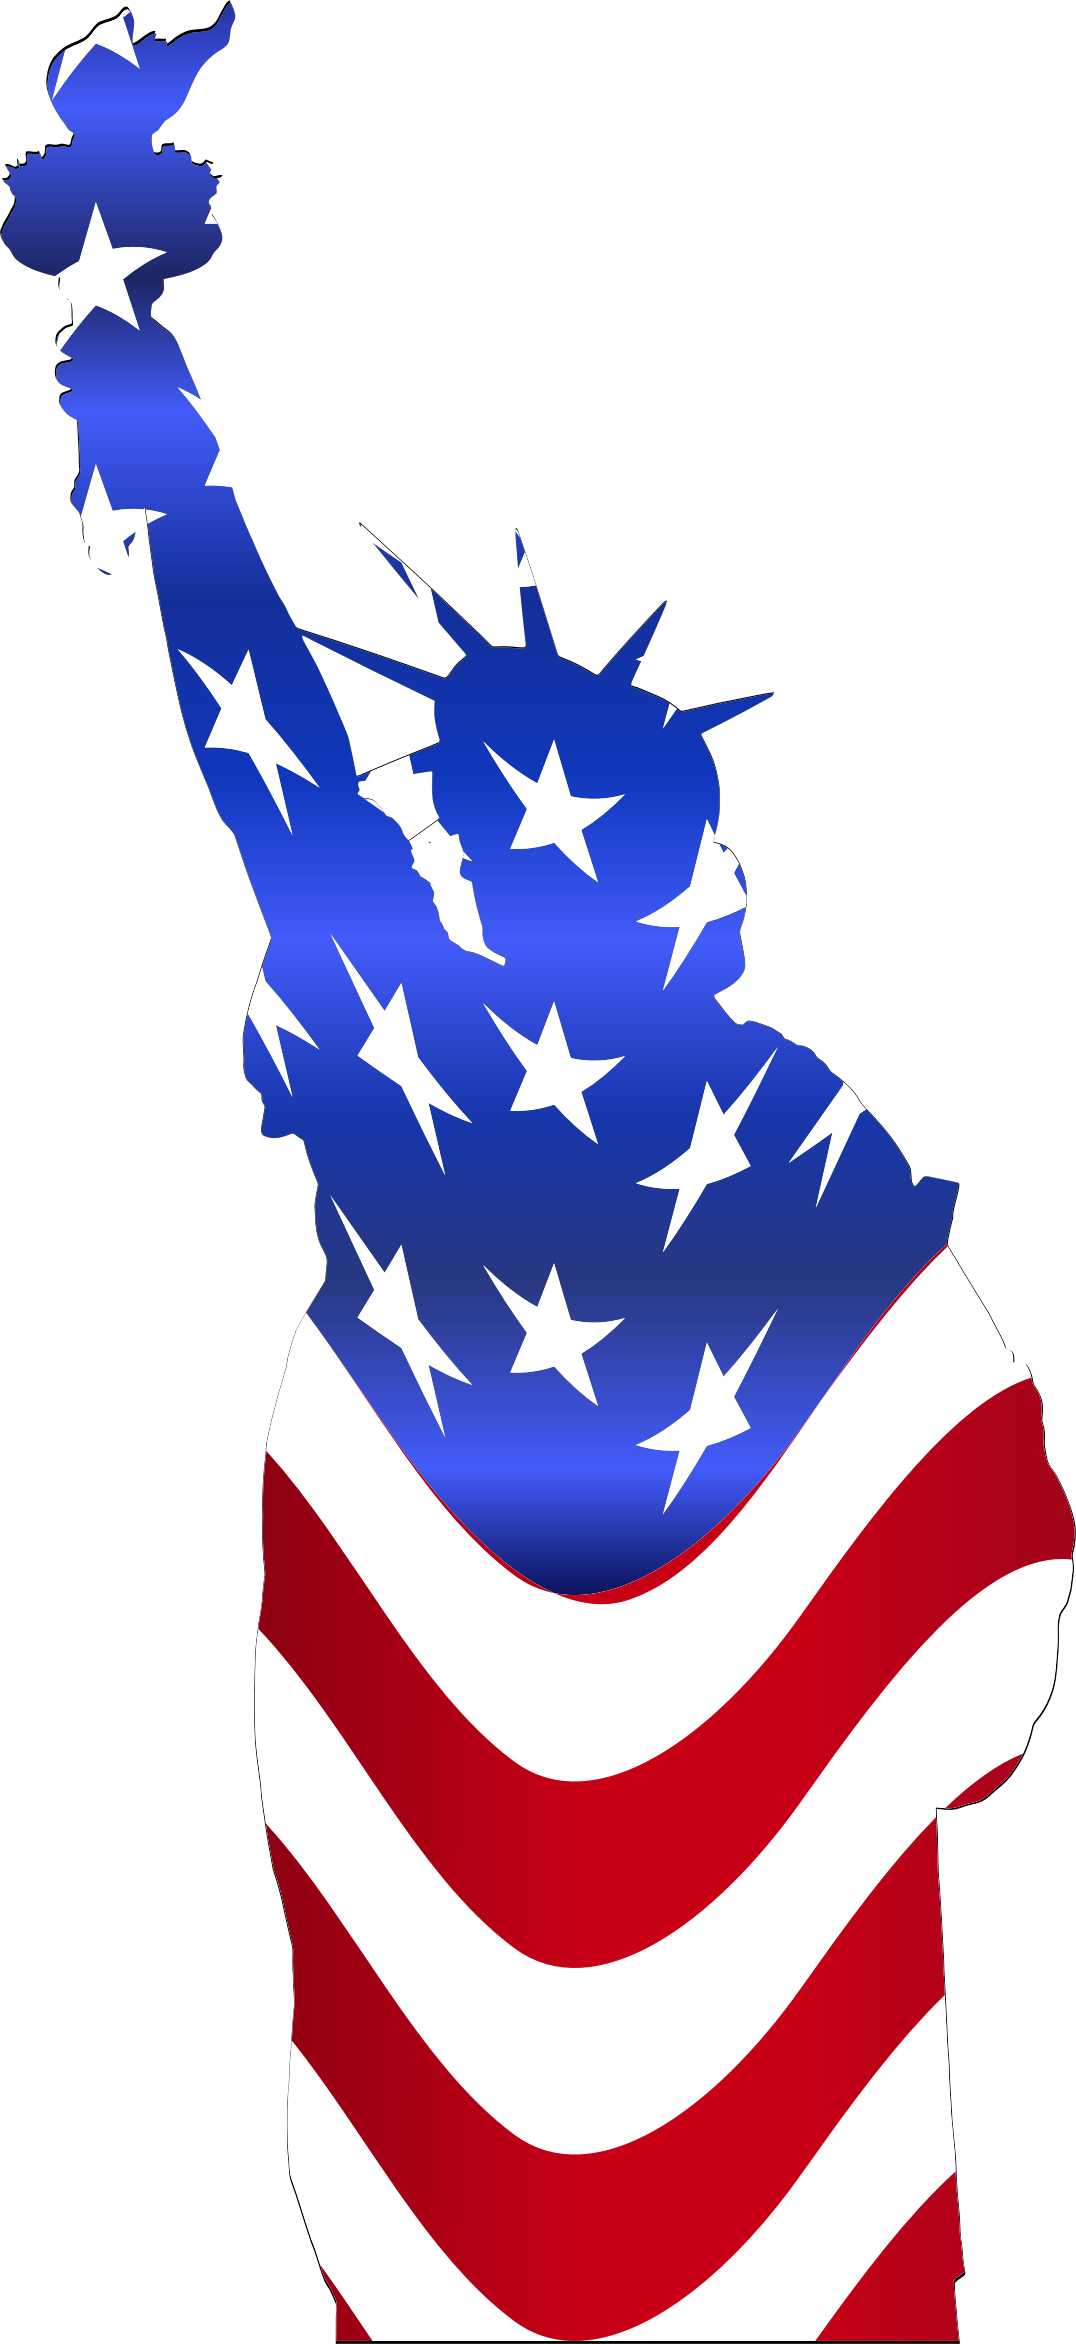 Big Image - Statue Of Liberty (american Flag) Throw Blanket (1076x2344)